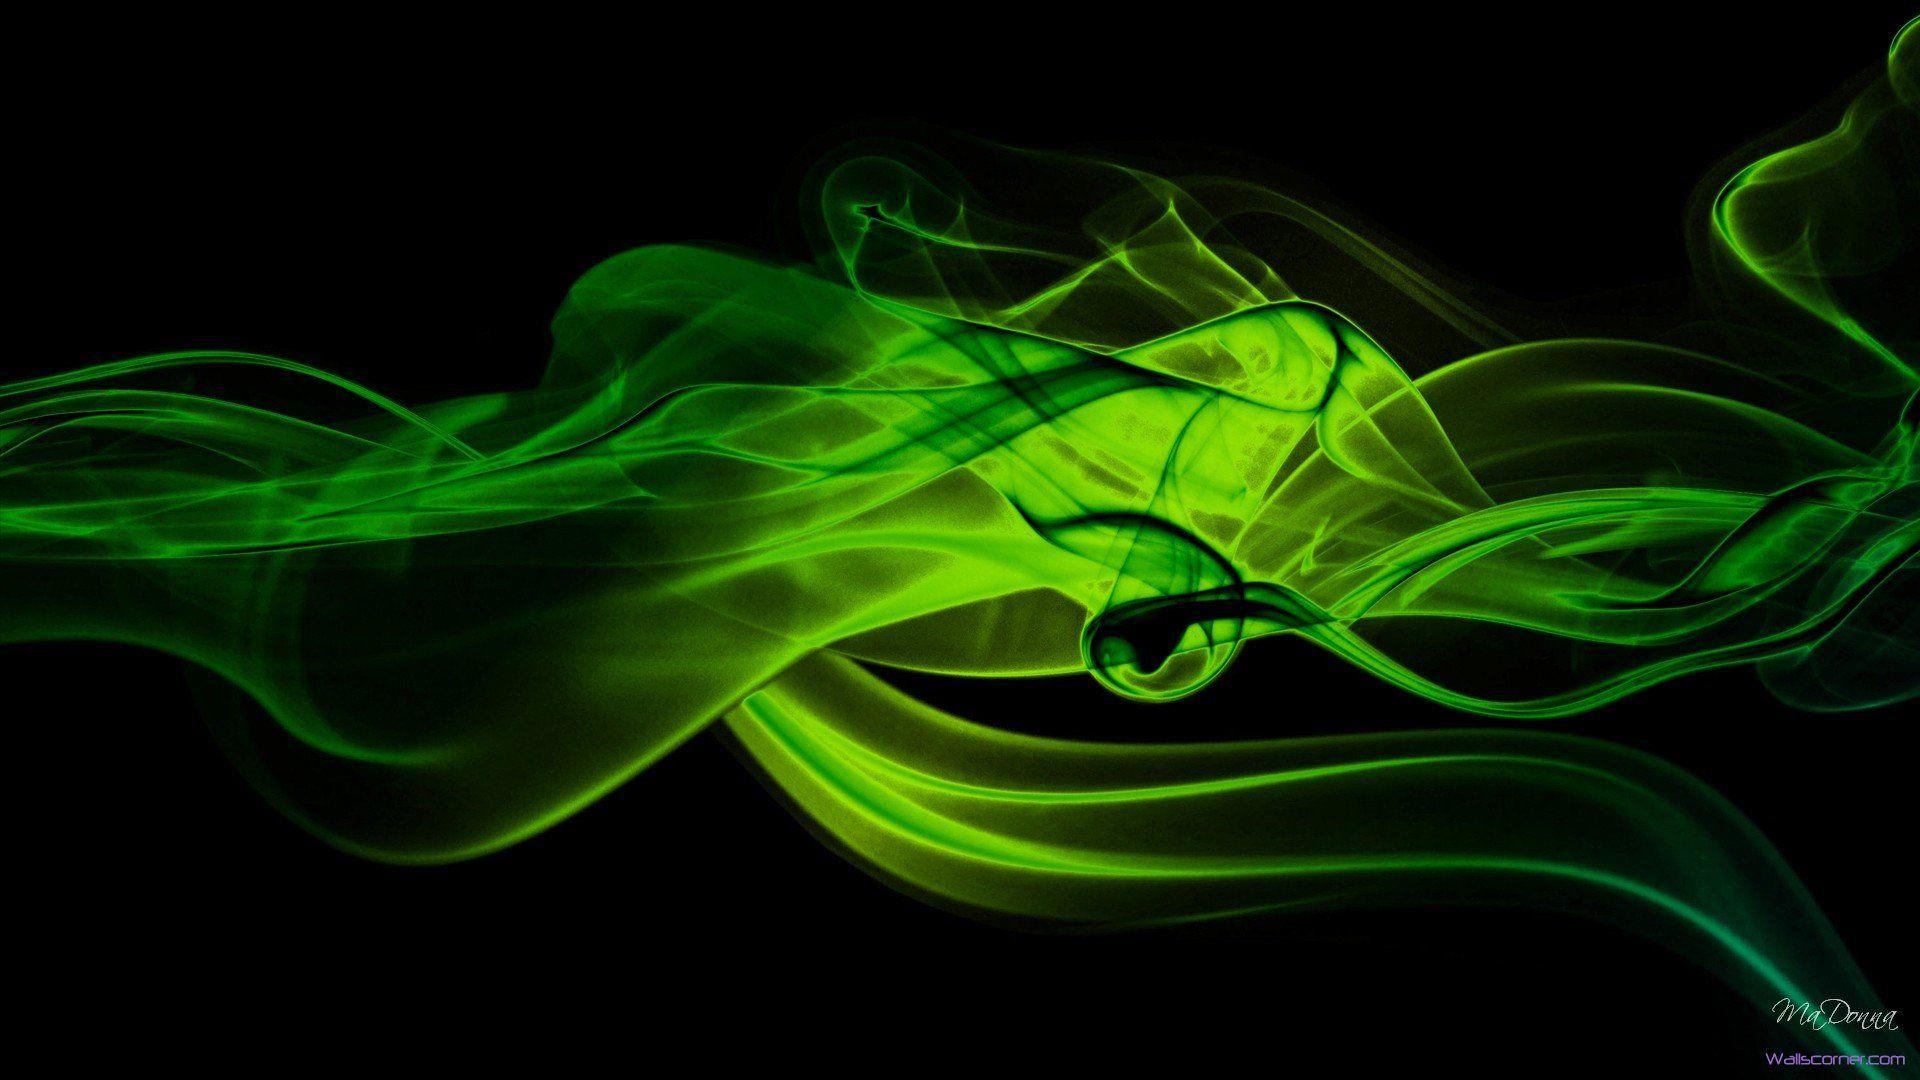 art is. Smoke wallpaper, Lime green